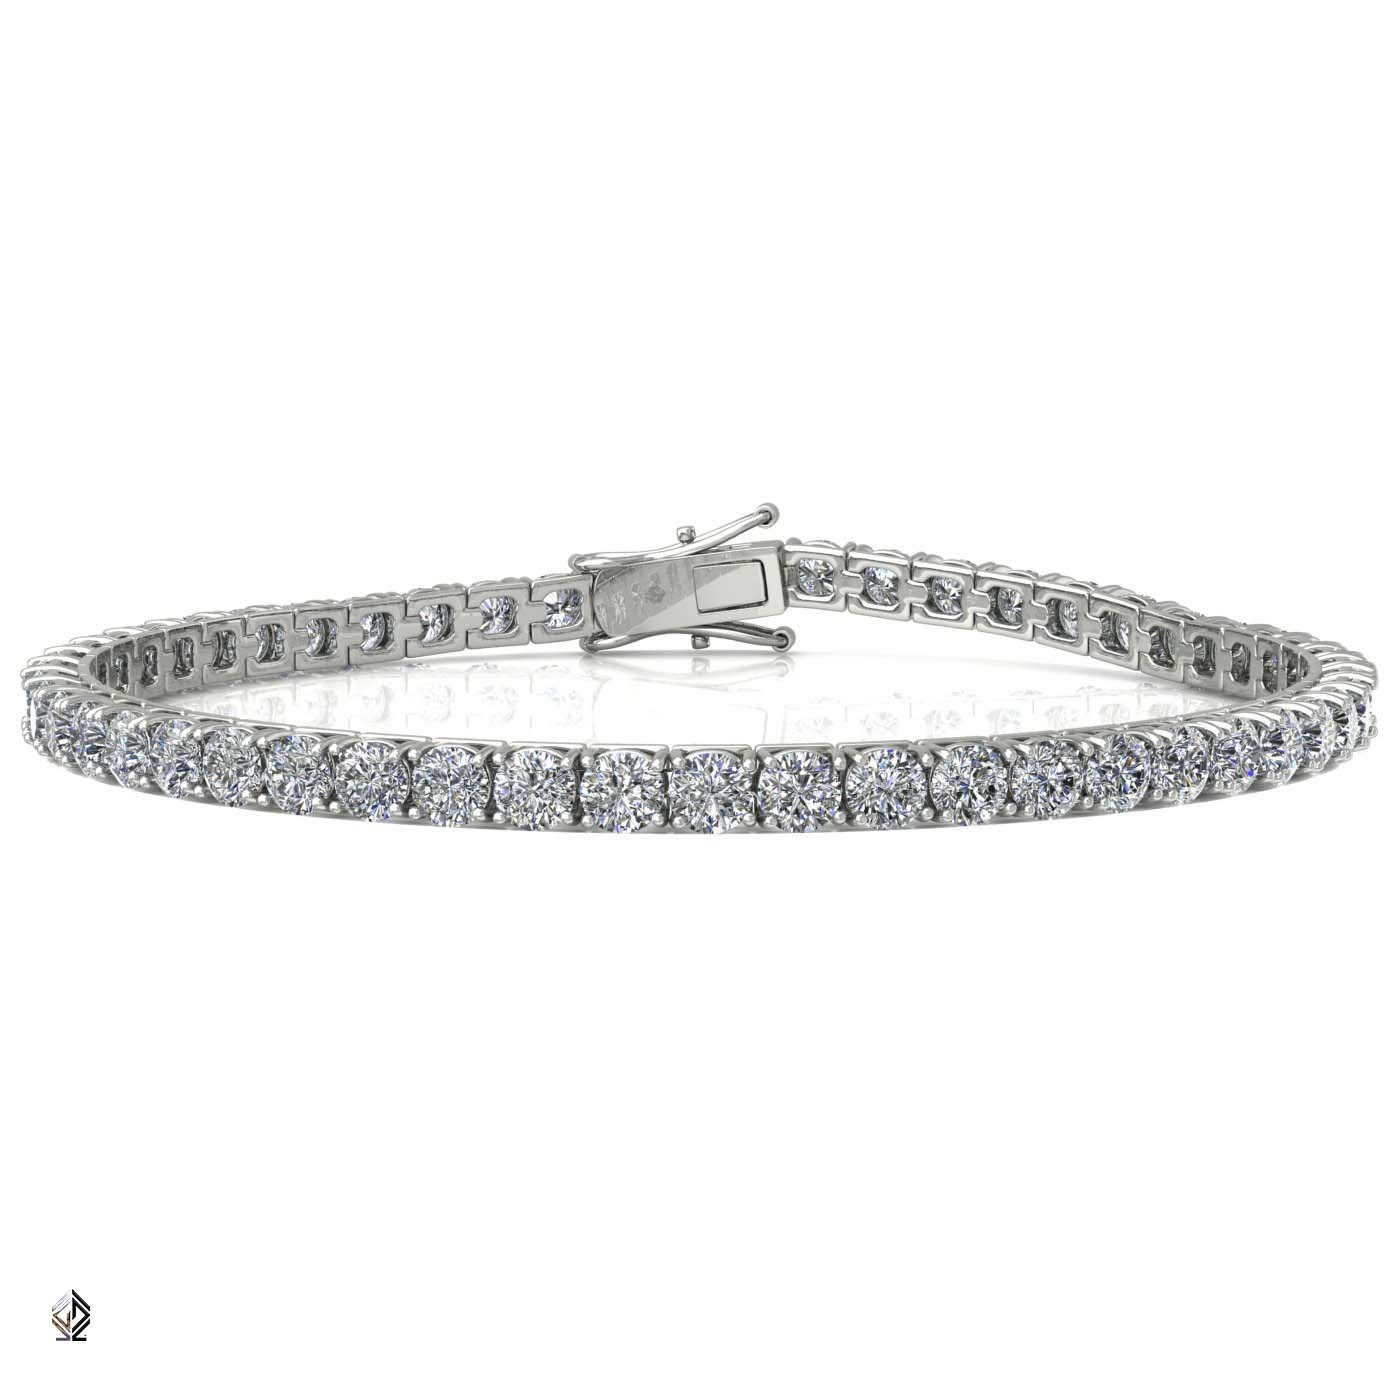 18k white gold 2.4mm 4 prong round shape diamond tennis bracelet in square setting